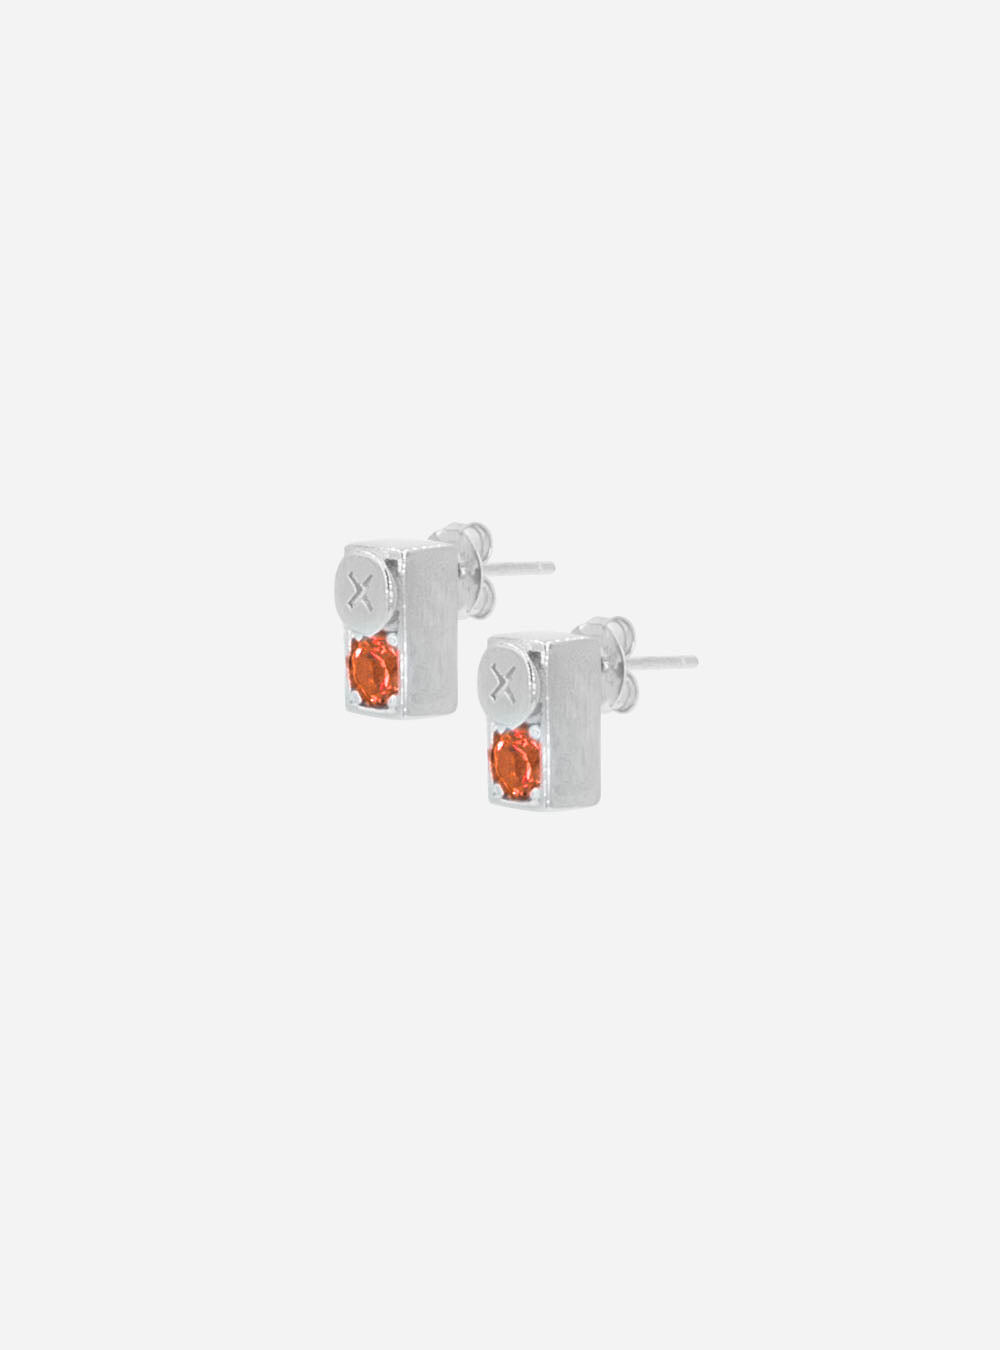 a pair of MIDNIGHTFACTORY Screwbox sapphire earrings with orange stones.